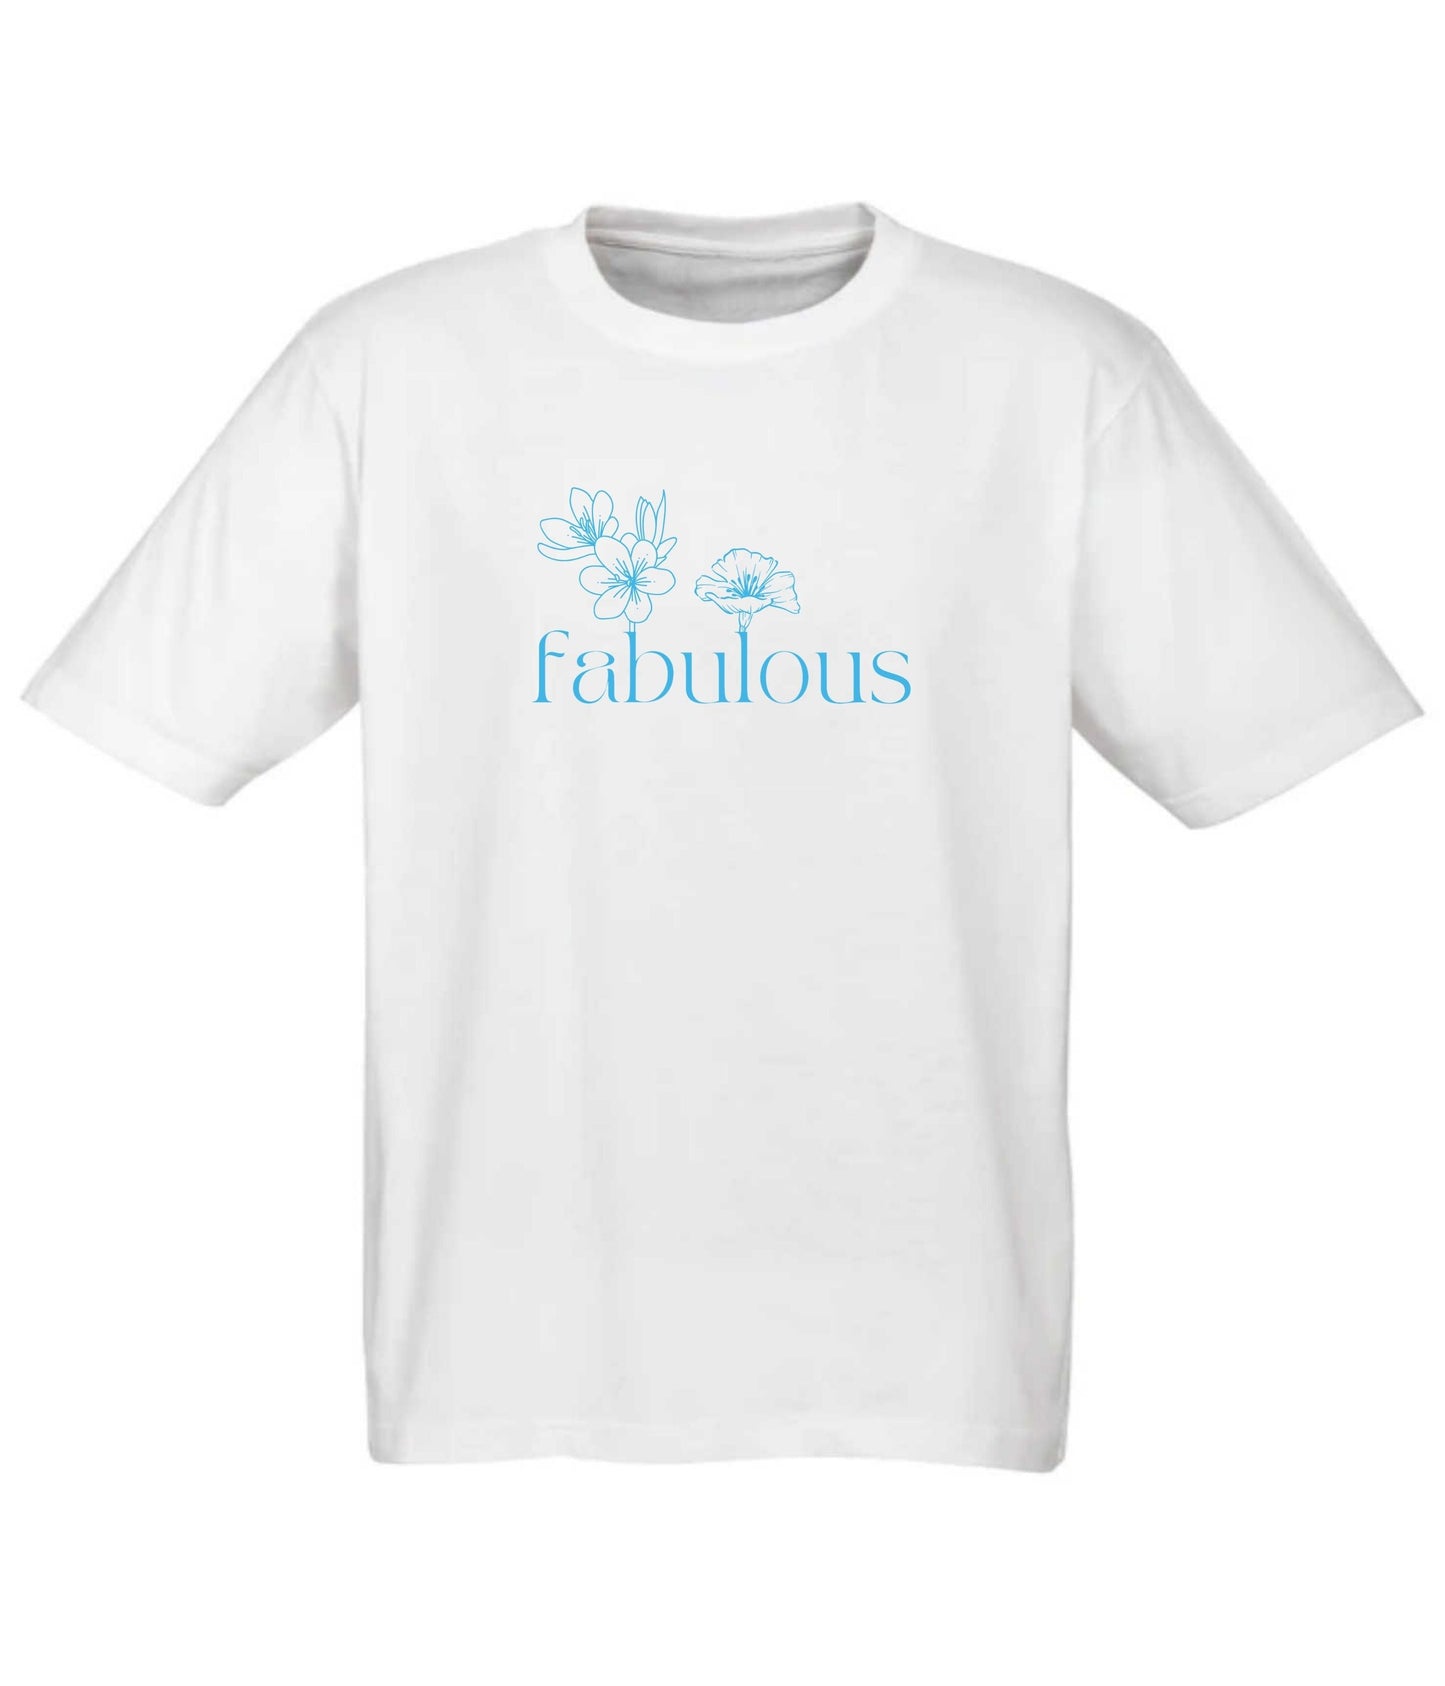 Tee - Fabulous (White) - Frame 'n' Copy